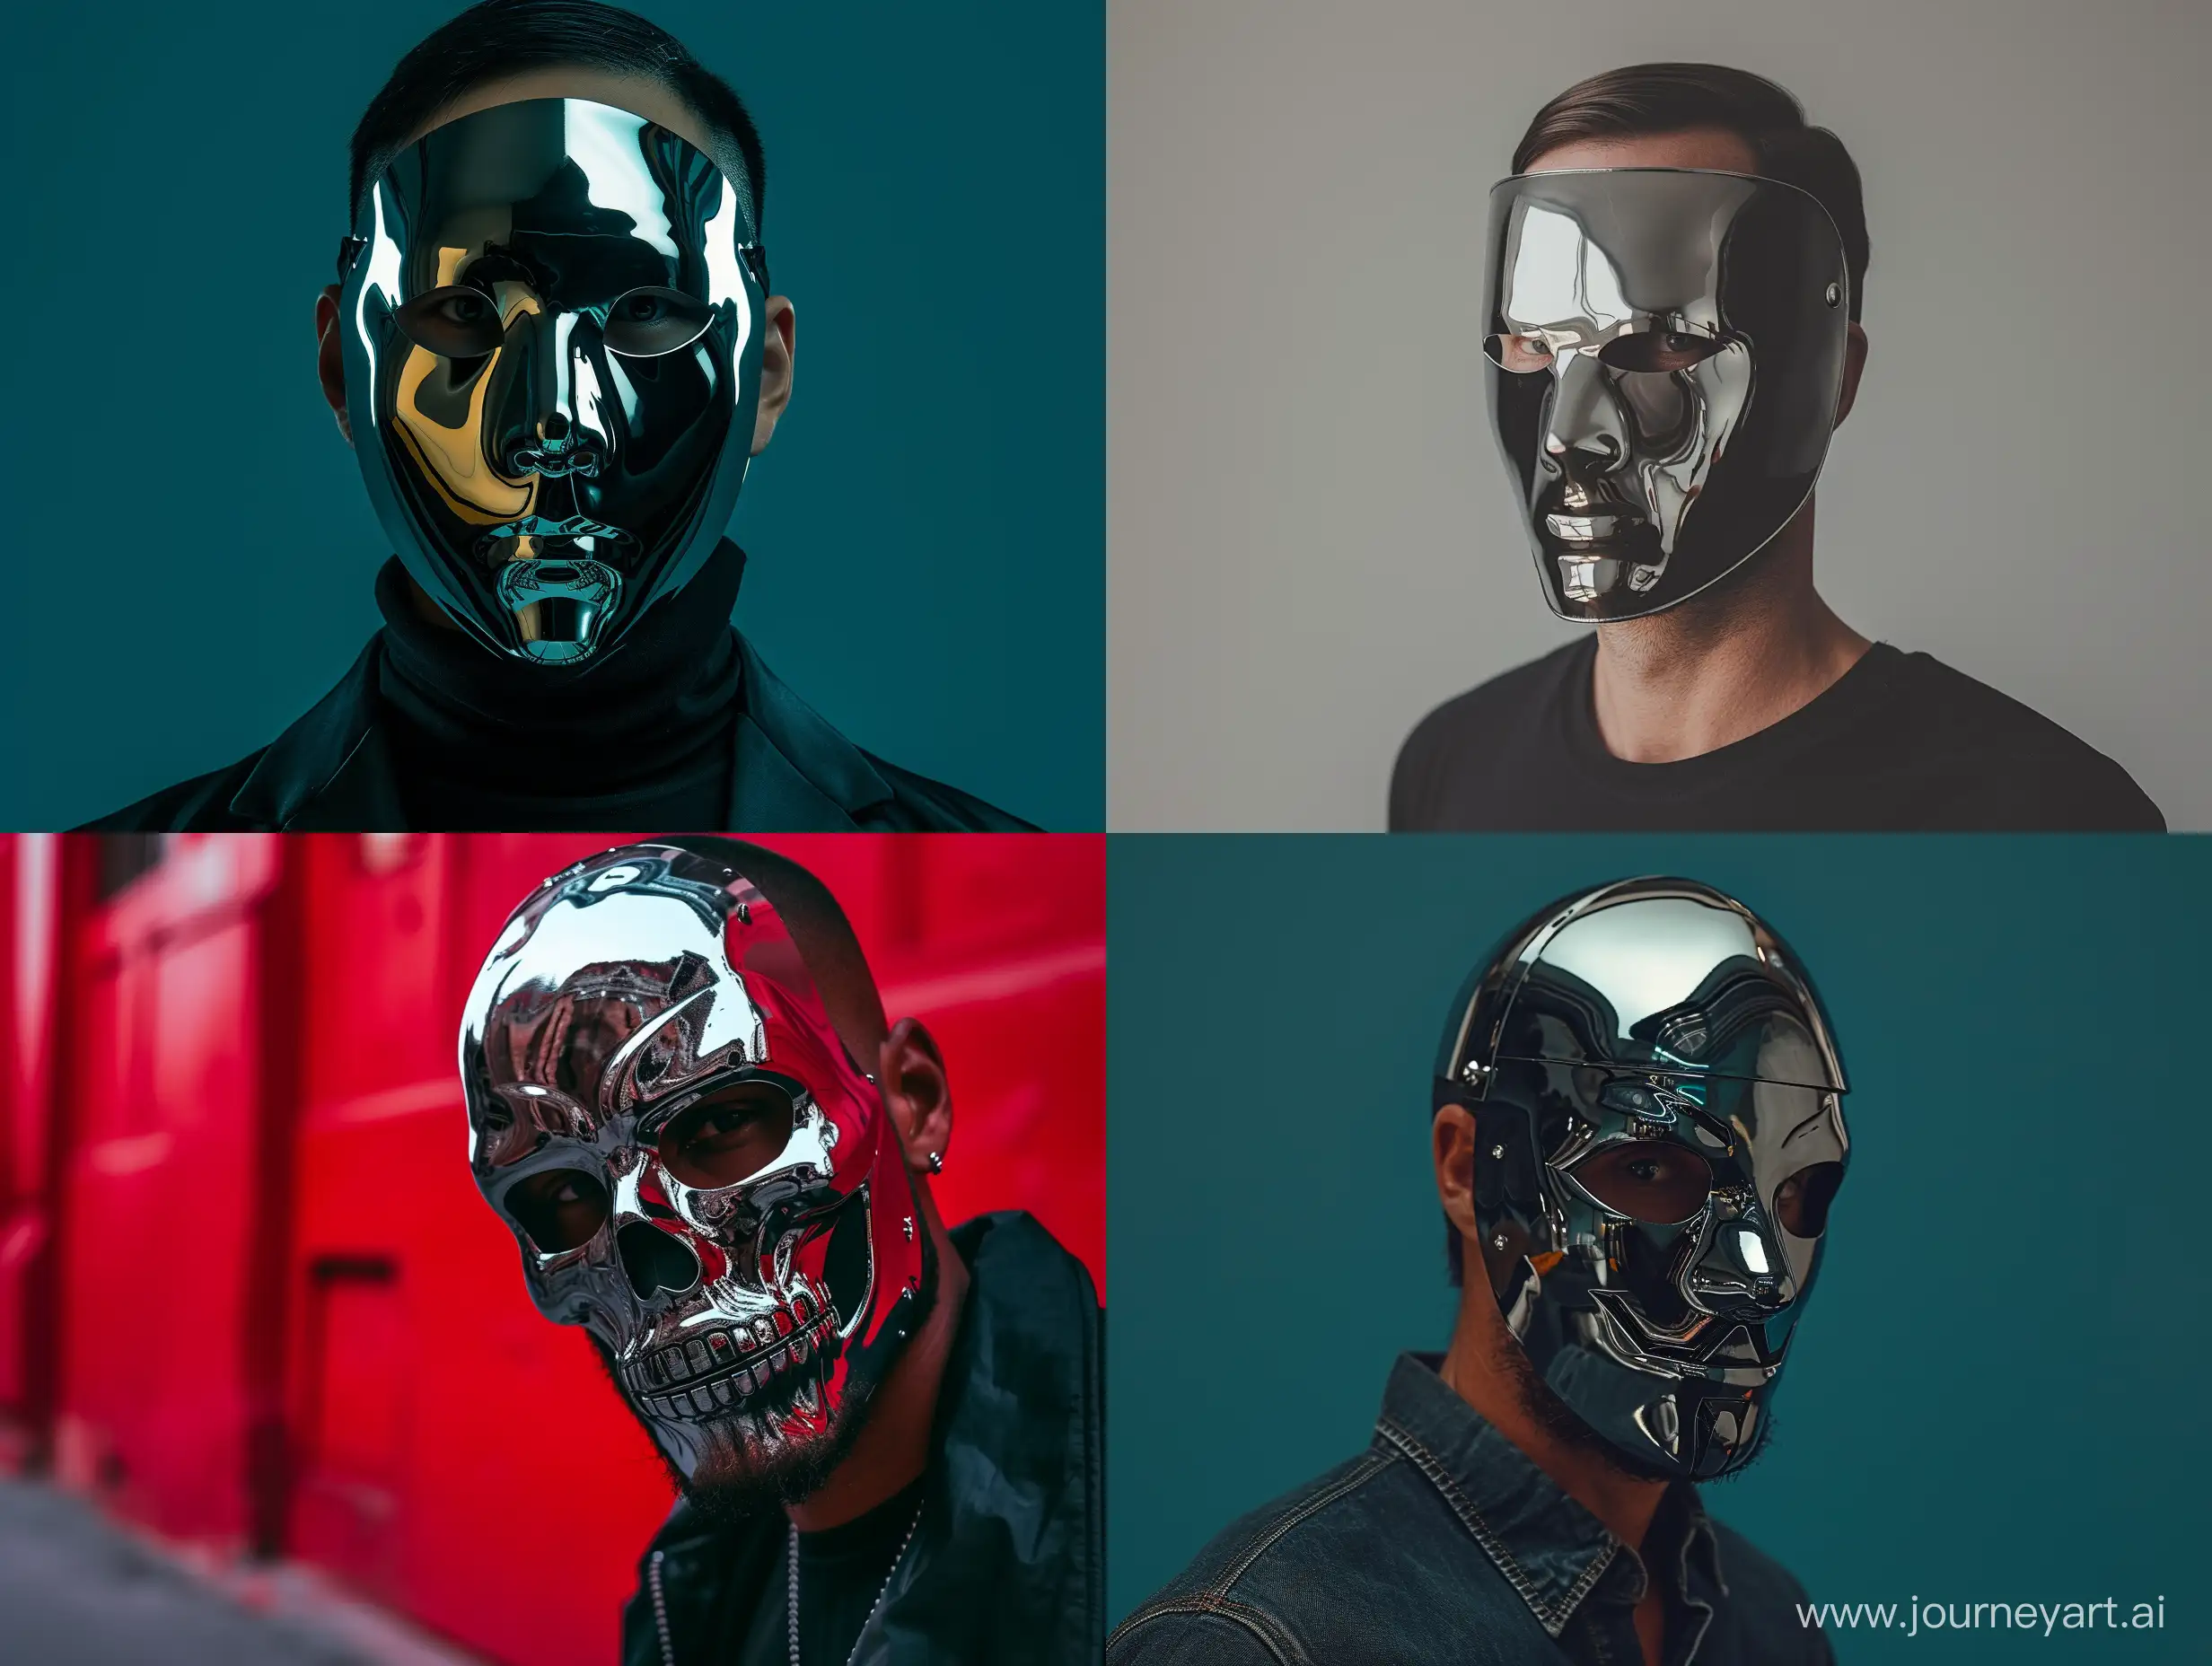 A portrait of a man wearing Chrome mask, high fashion photography 